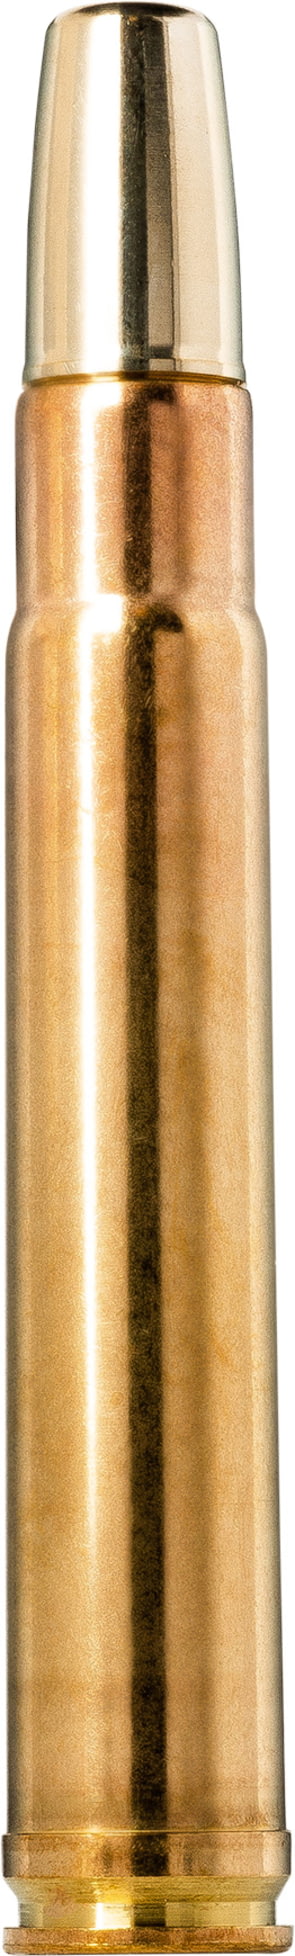 Norma Solid Ammunition .416 Remington Magnum 400 Grain Solid Brass Cased Centerfire Rifle Ammunition